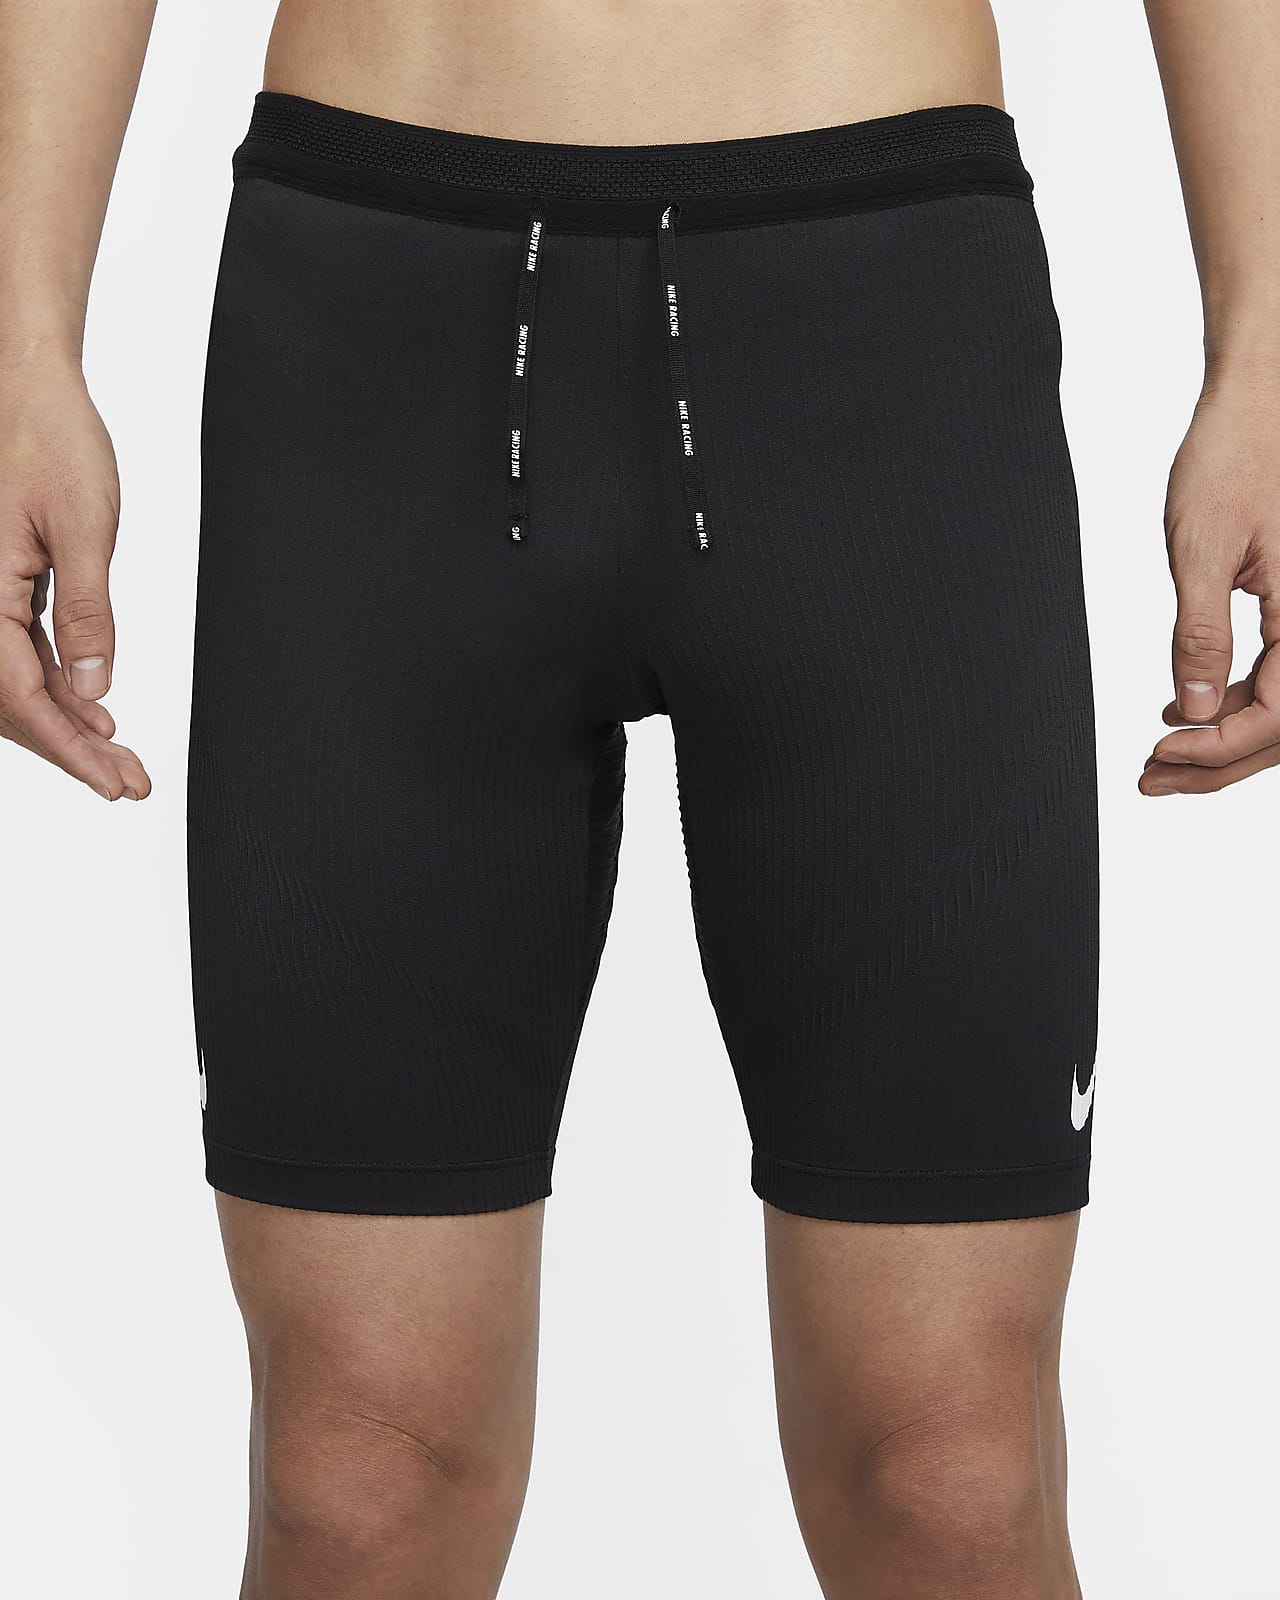 Nike Aeroswift Vapor 1 Knit Shorts Running Gym Fitness Football Holiday